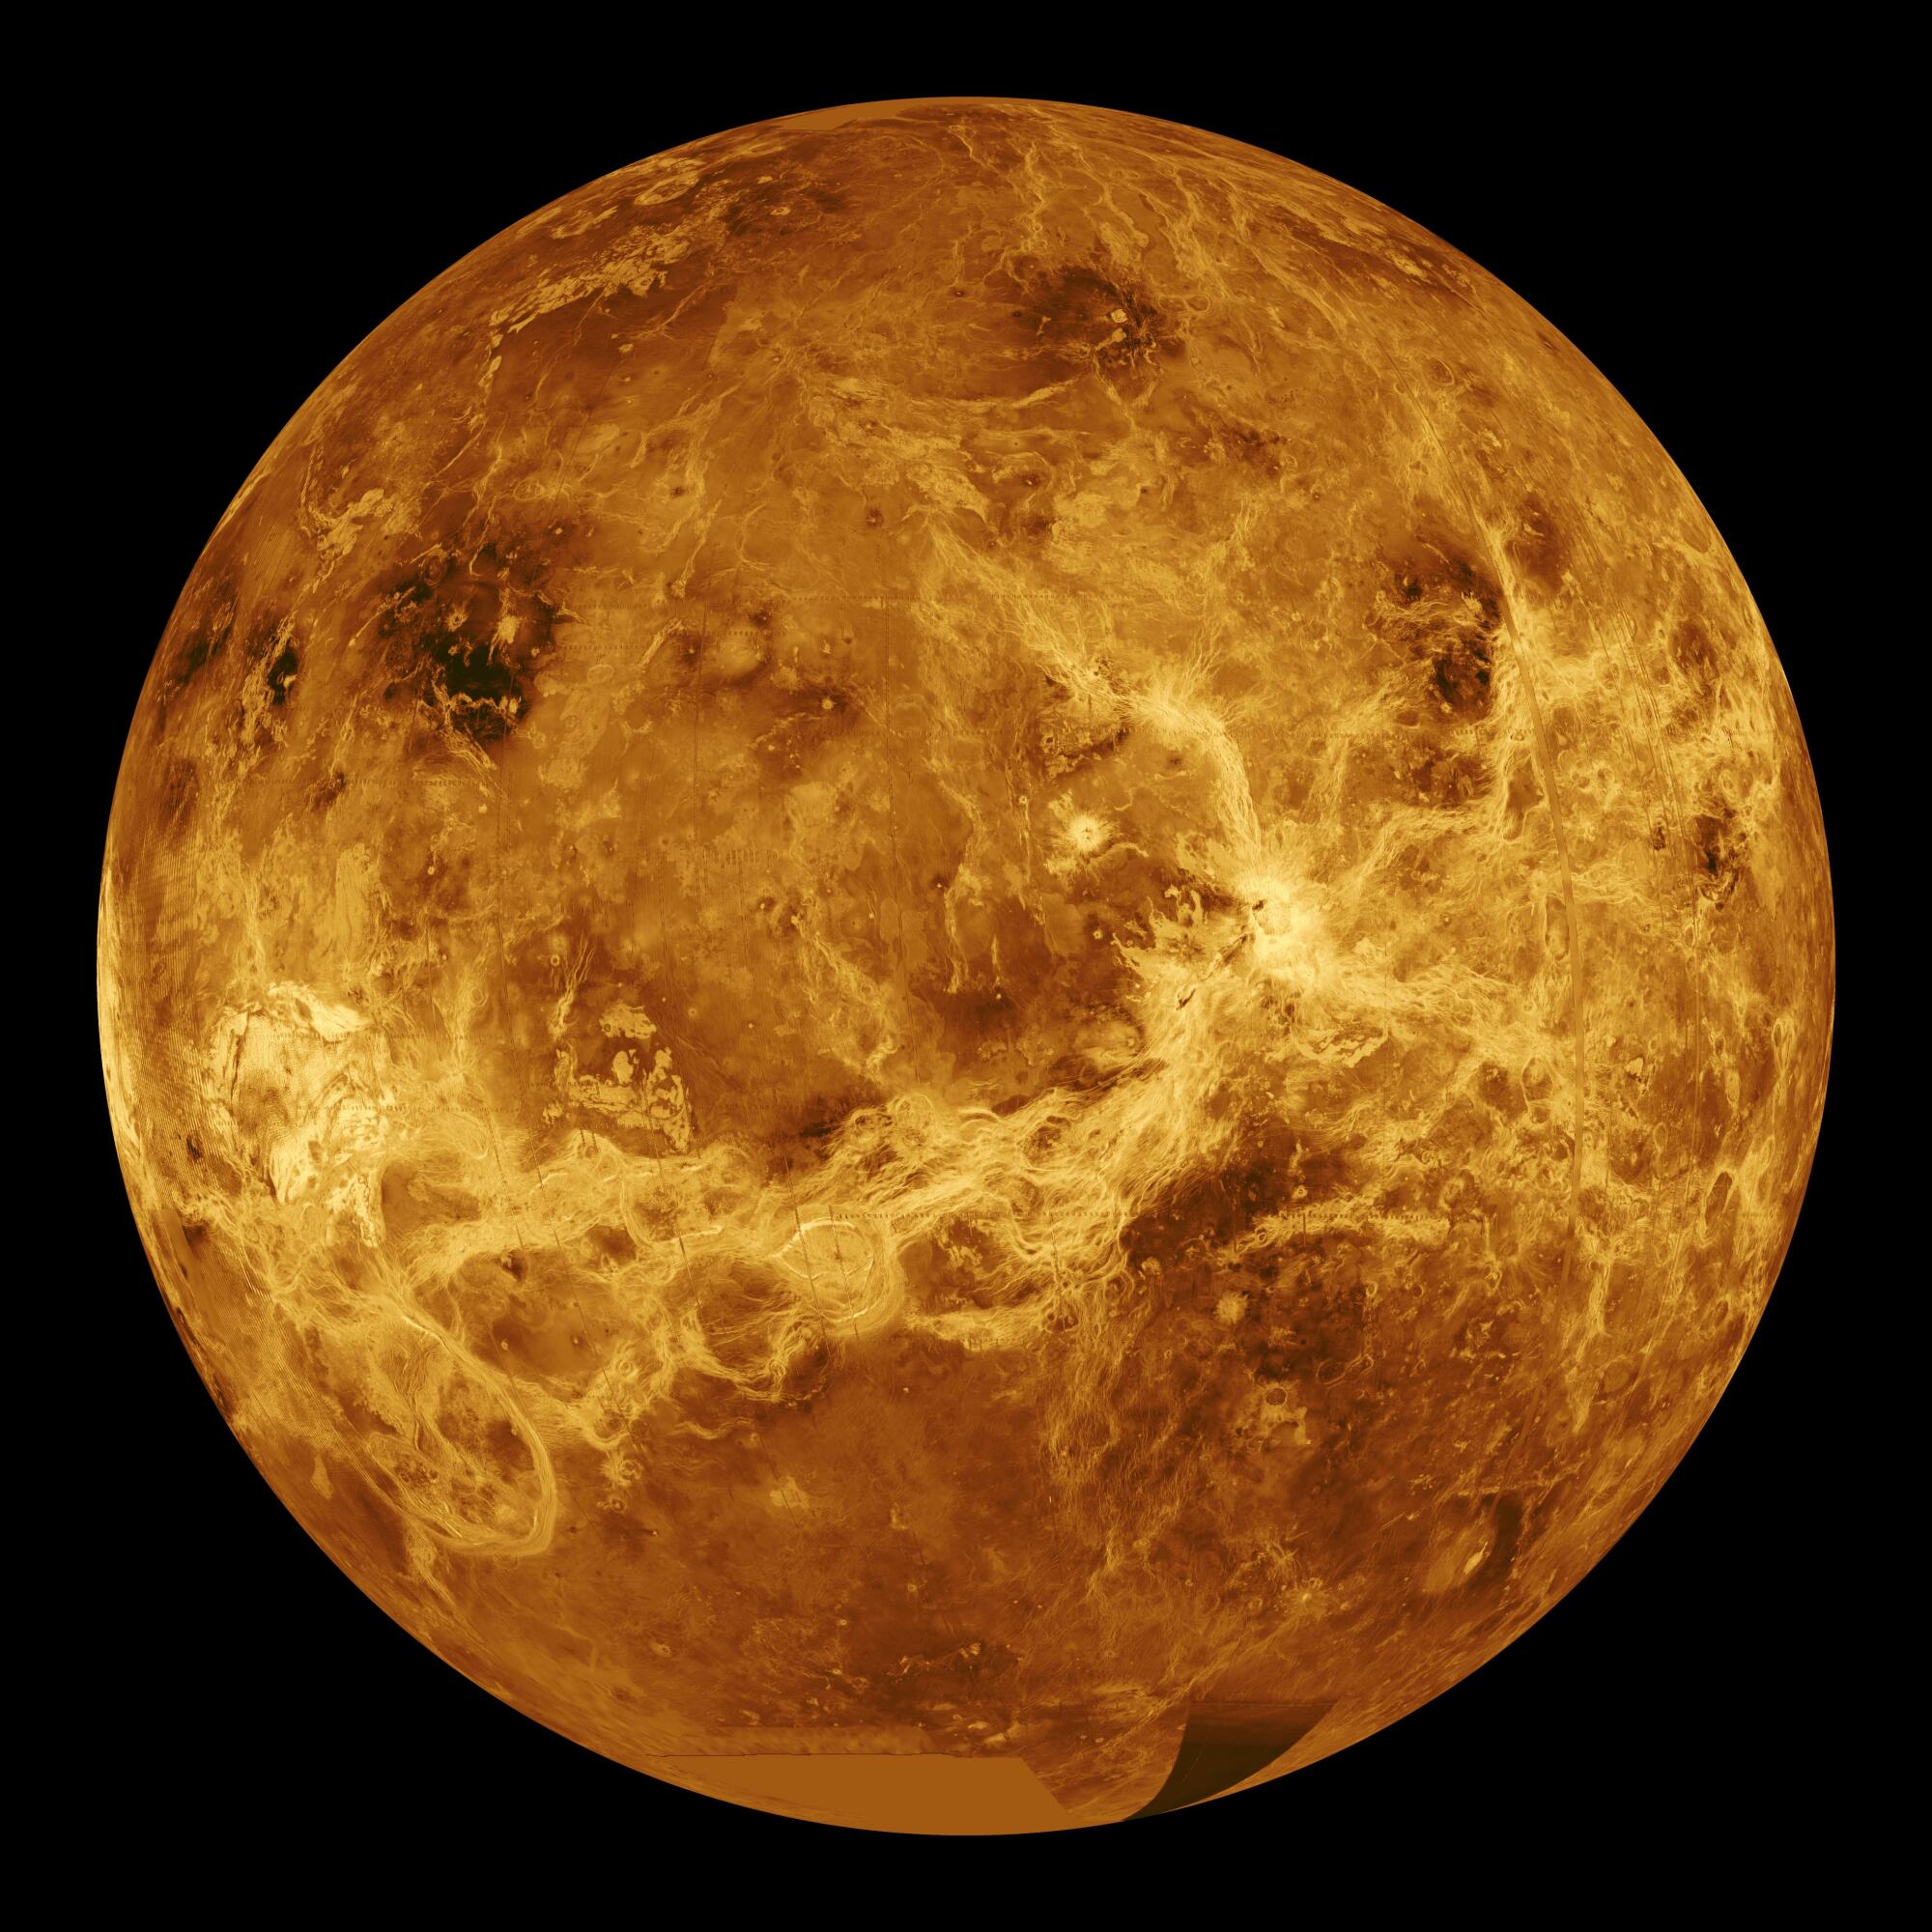 NASA taking a global view of Venus